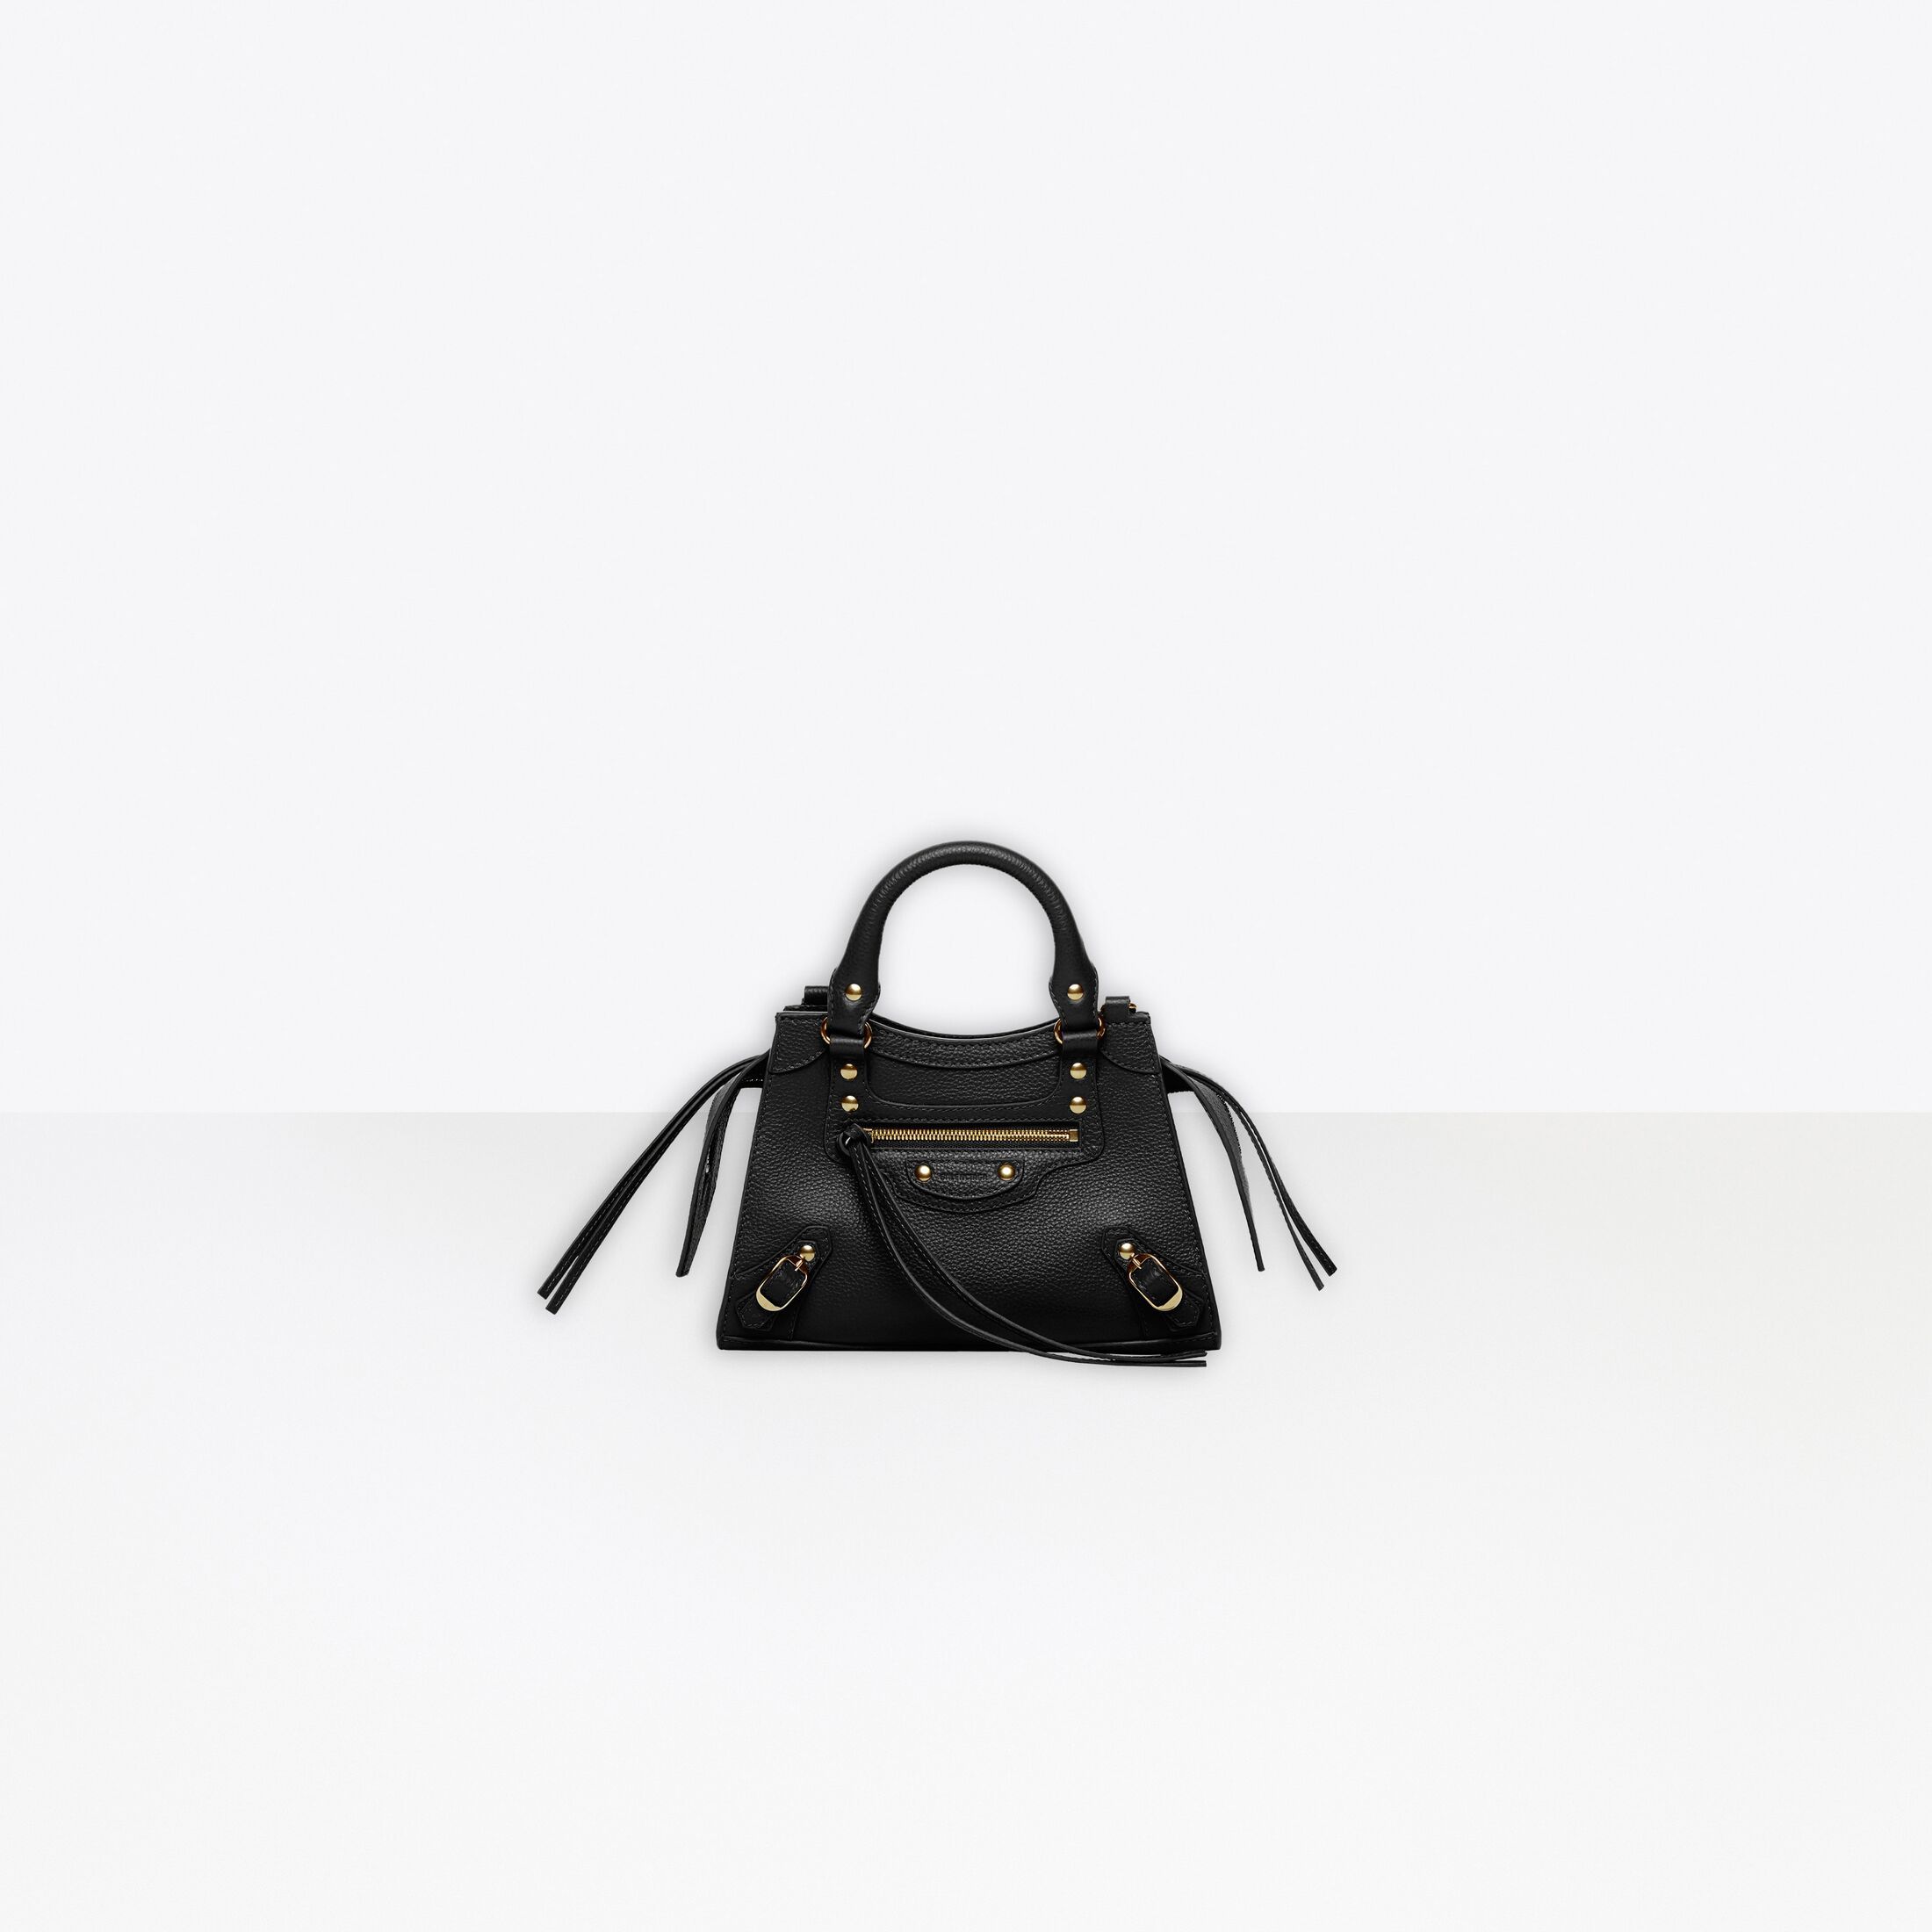 Kourtney Kardashian's Dior Saddle Bag Is Carrie Bradshaw-Approved